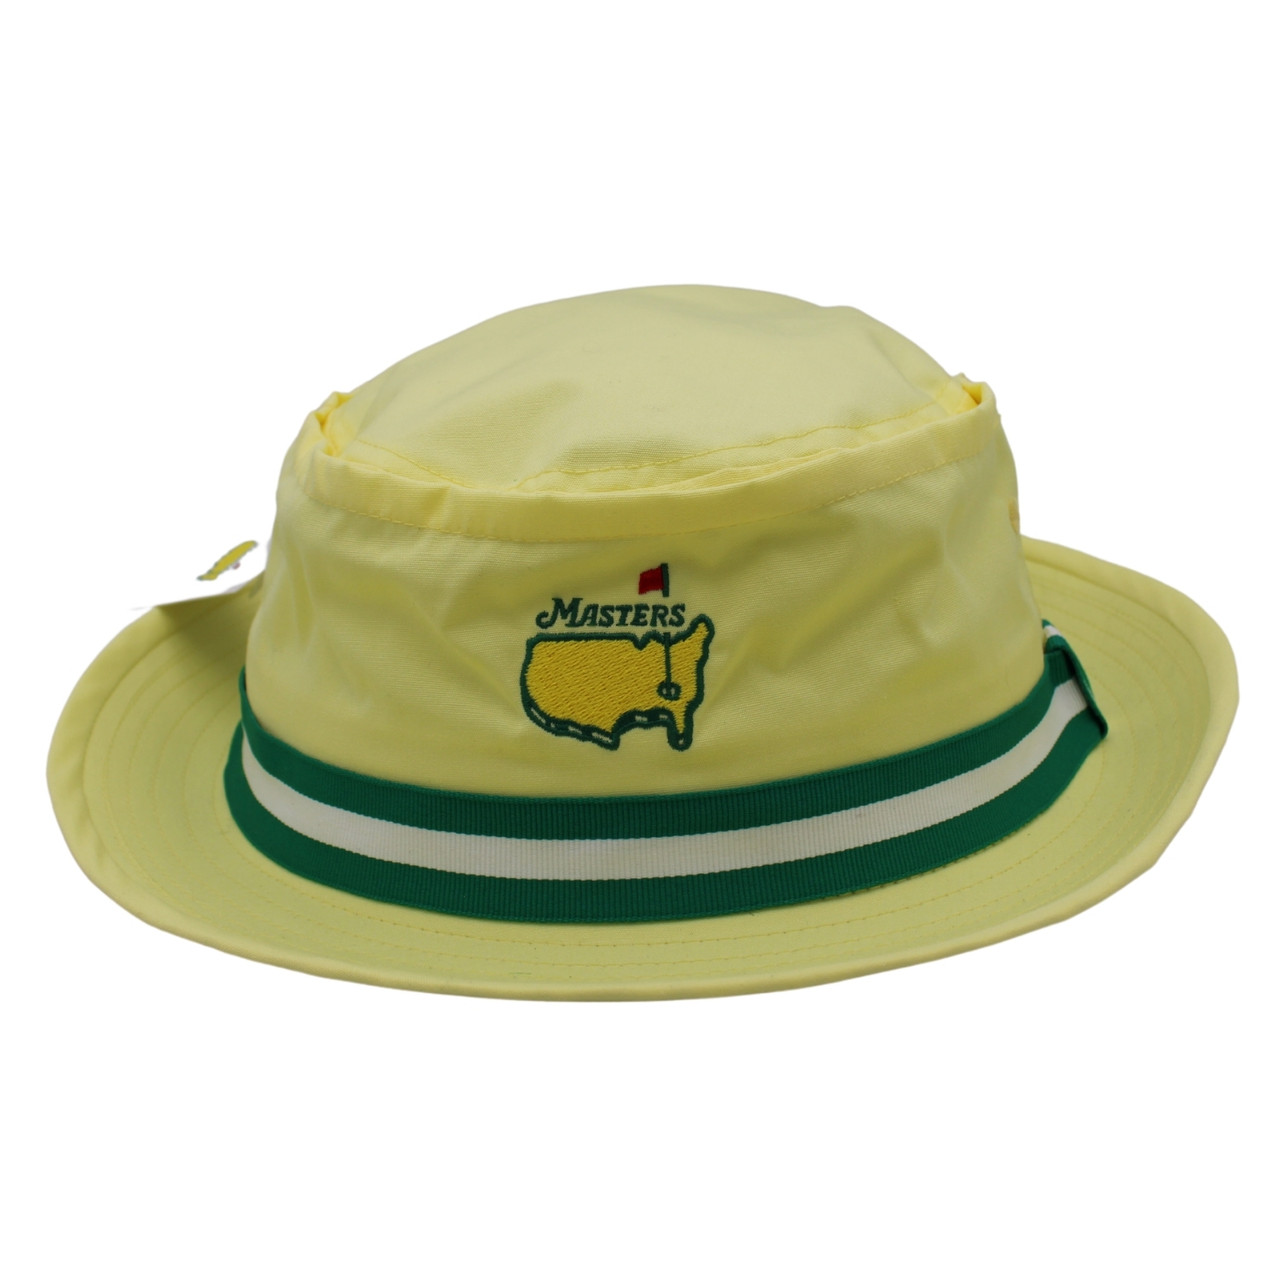 Masters Yellow Bucket Hat